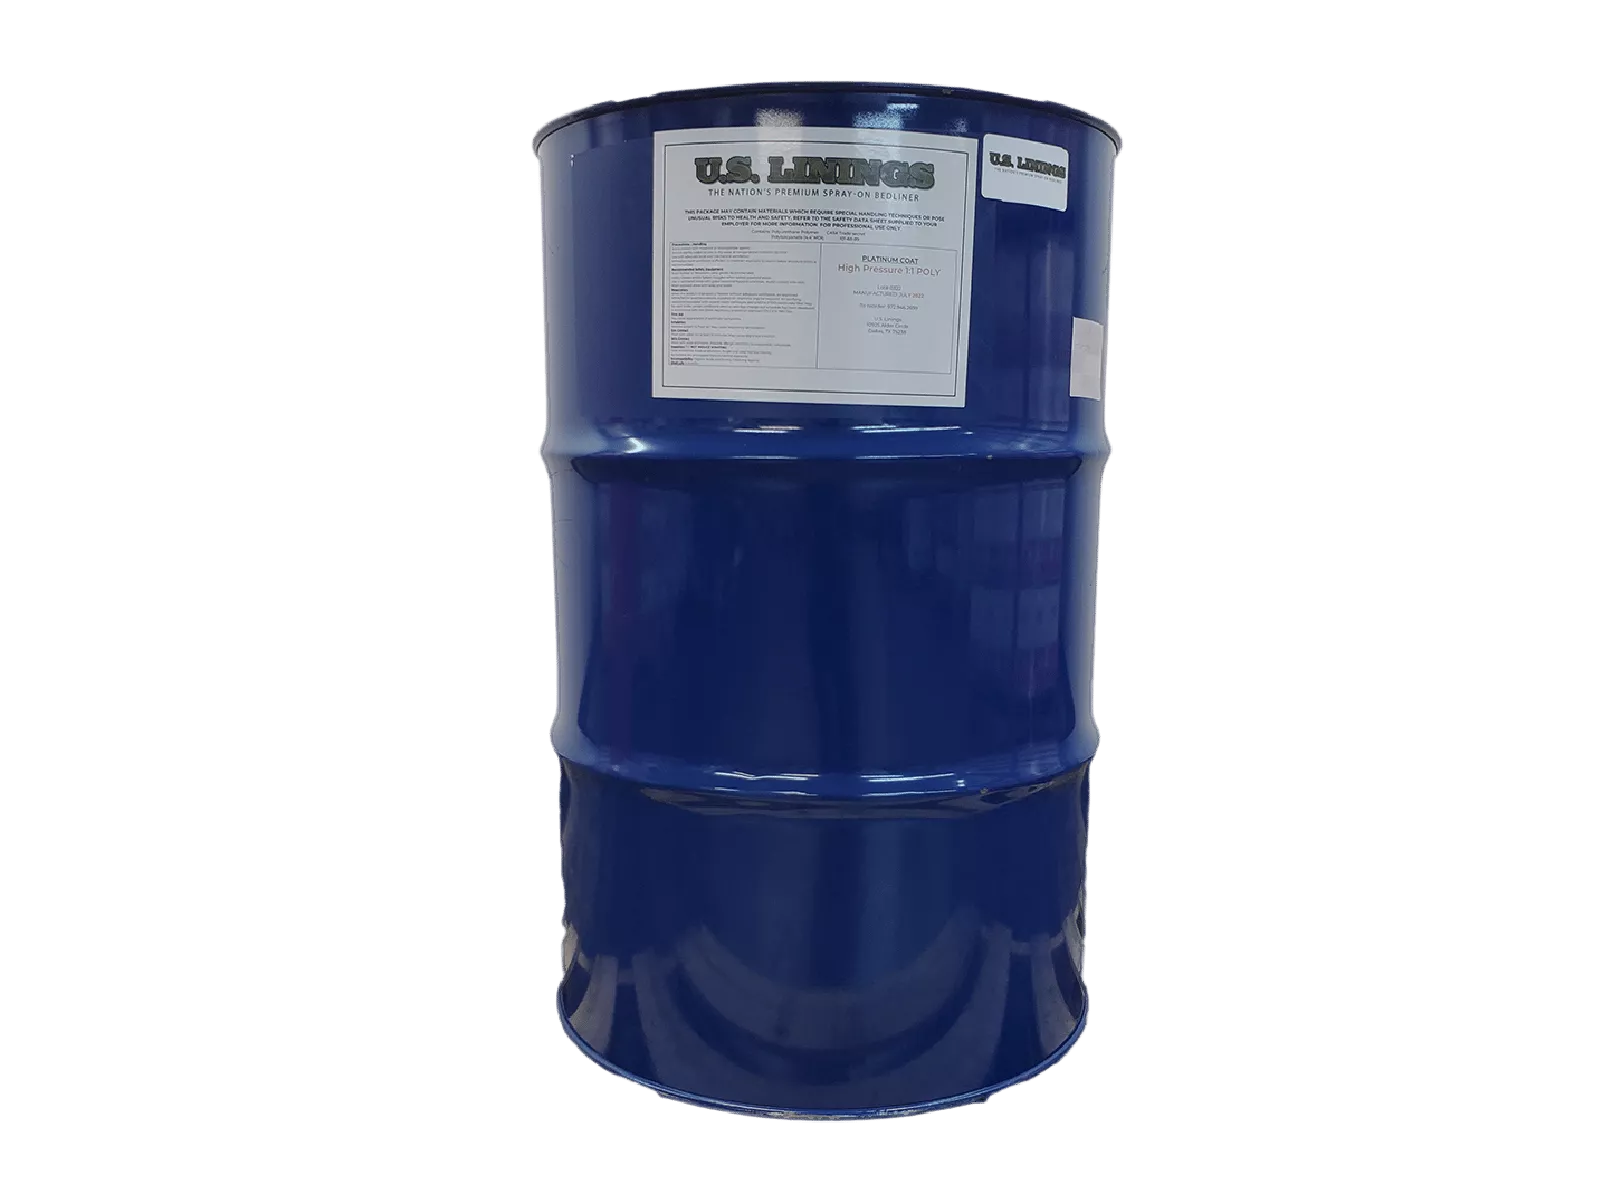 U.S. Linings Chemical 1776 Side B Drum Barrel - High-Quality Bedliner Chemical